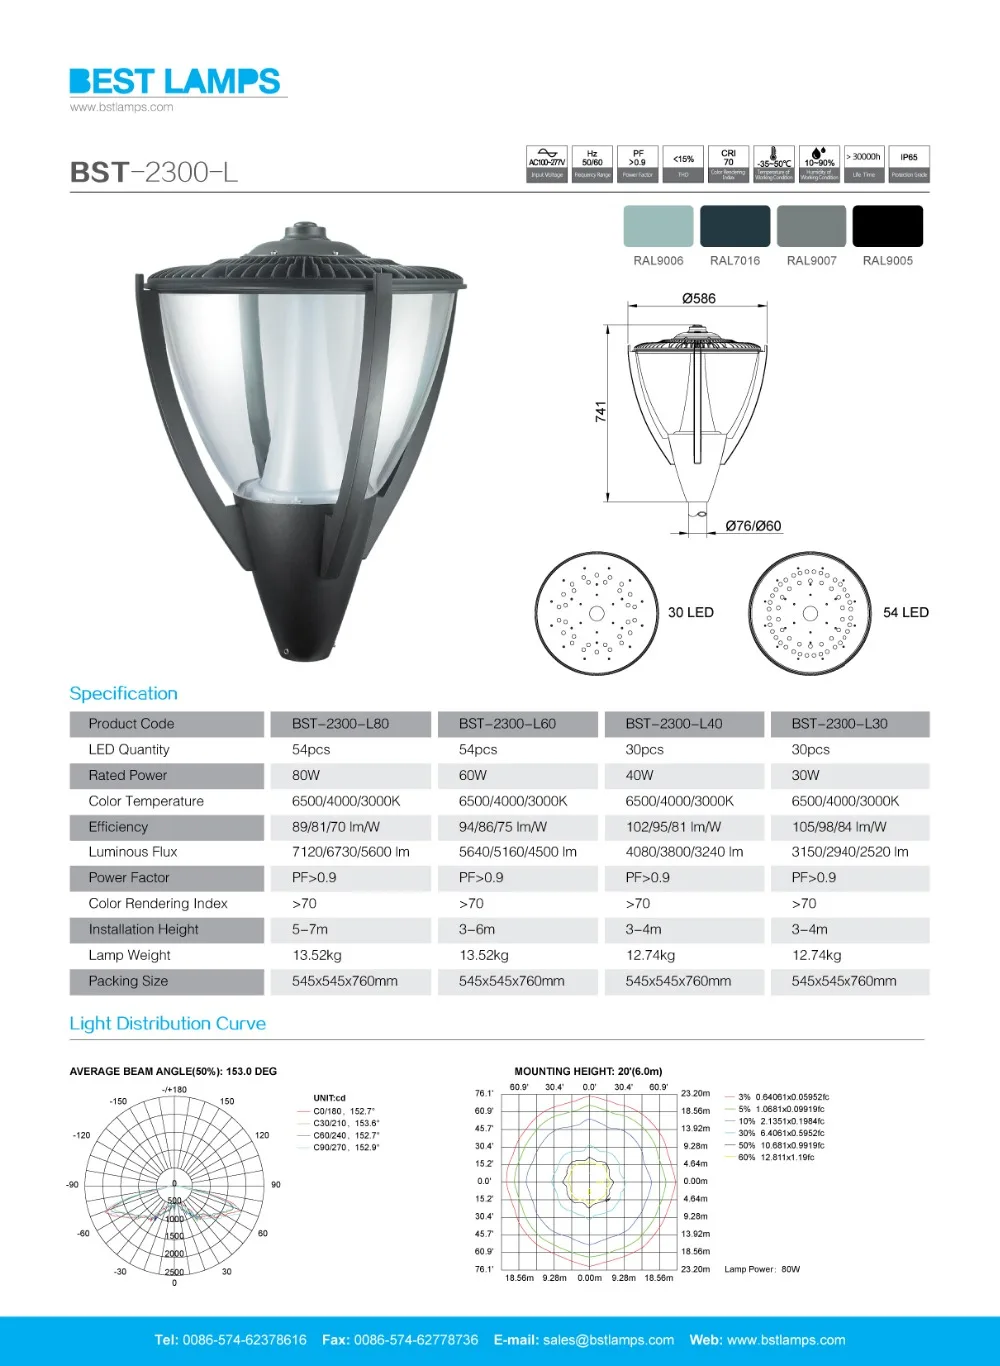 BST-2300-L led high power lamp led outdoor lighting